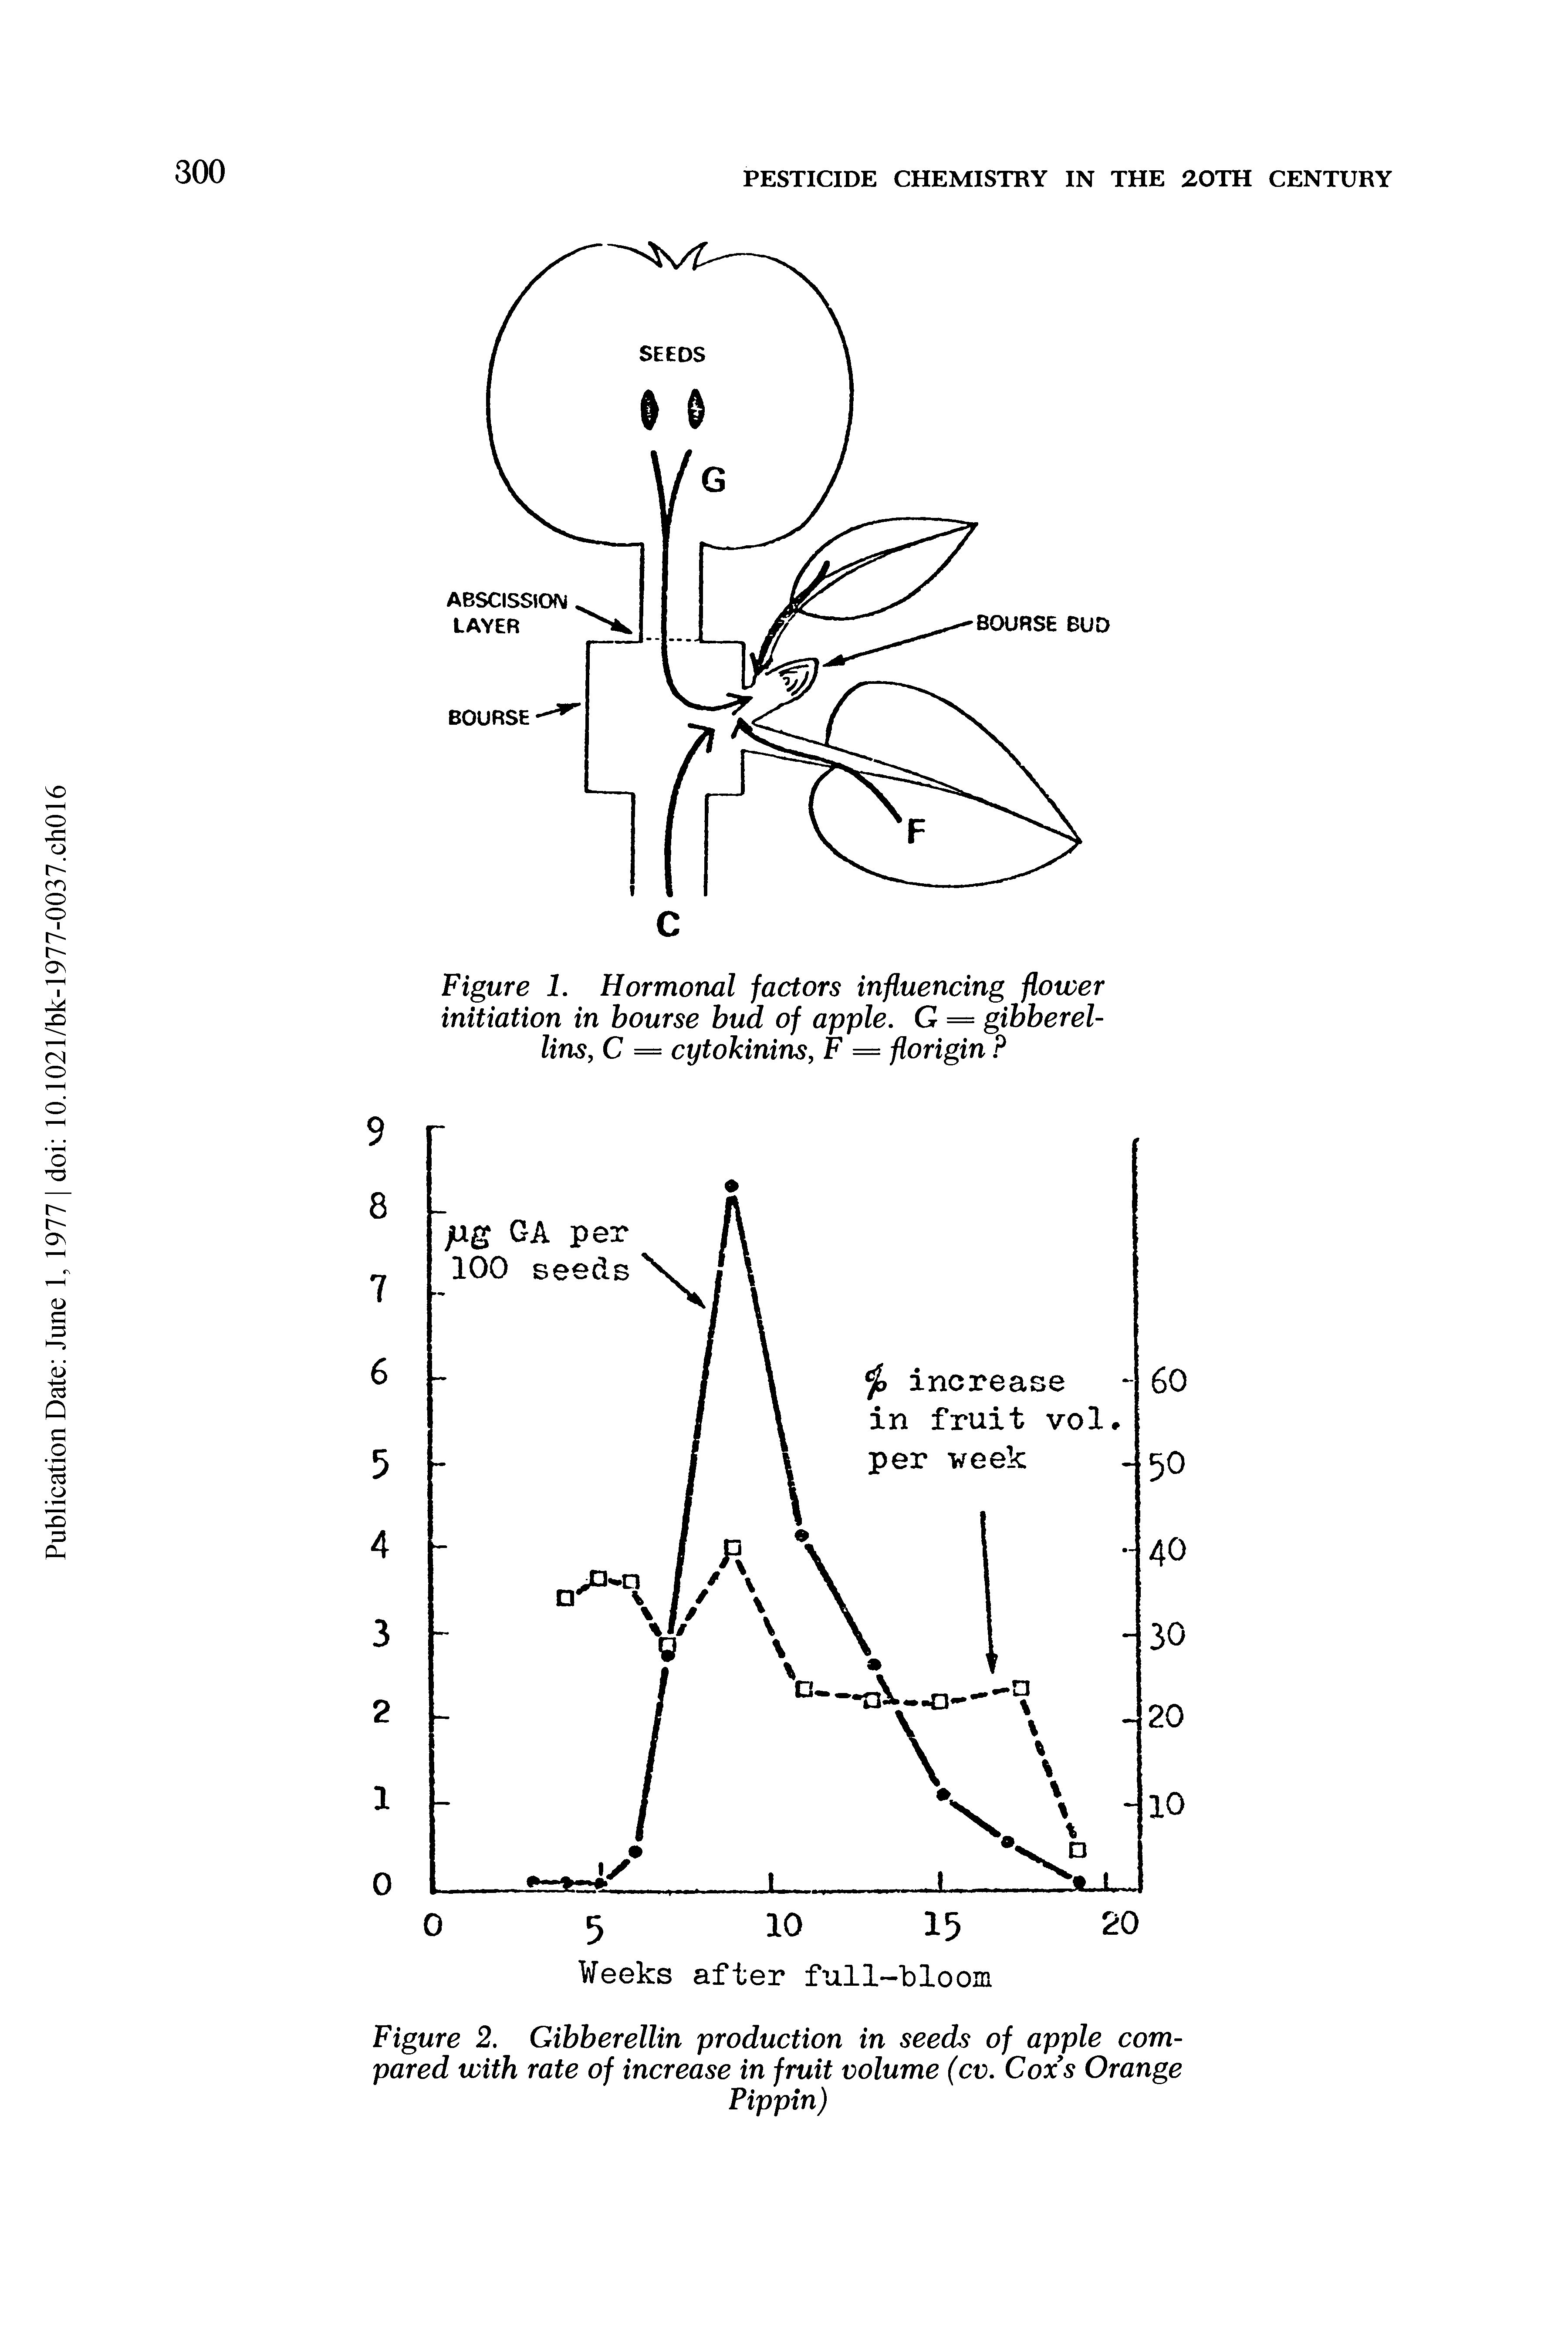 Figure 1. Hormonal factors influencing flower initiation in bourse bud of apple. G = gibberel-lins, C = cytokinins, F = florigin P...